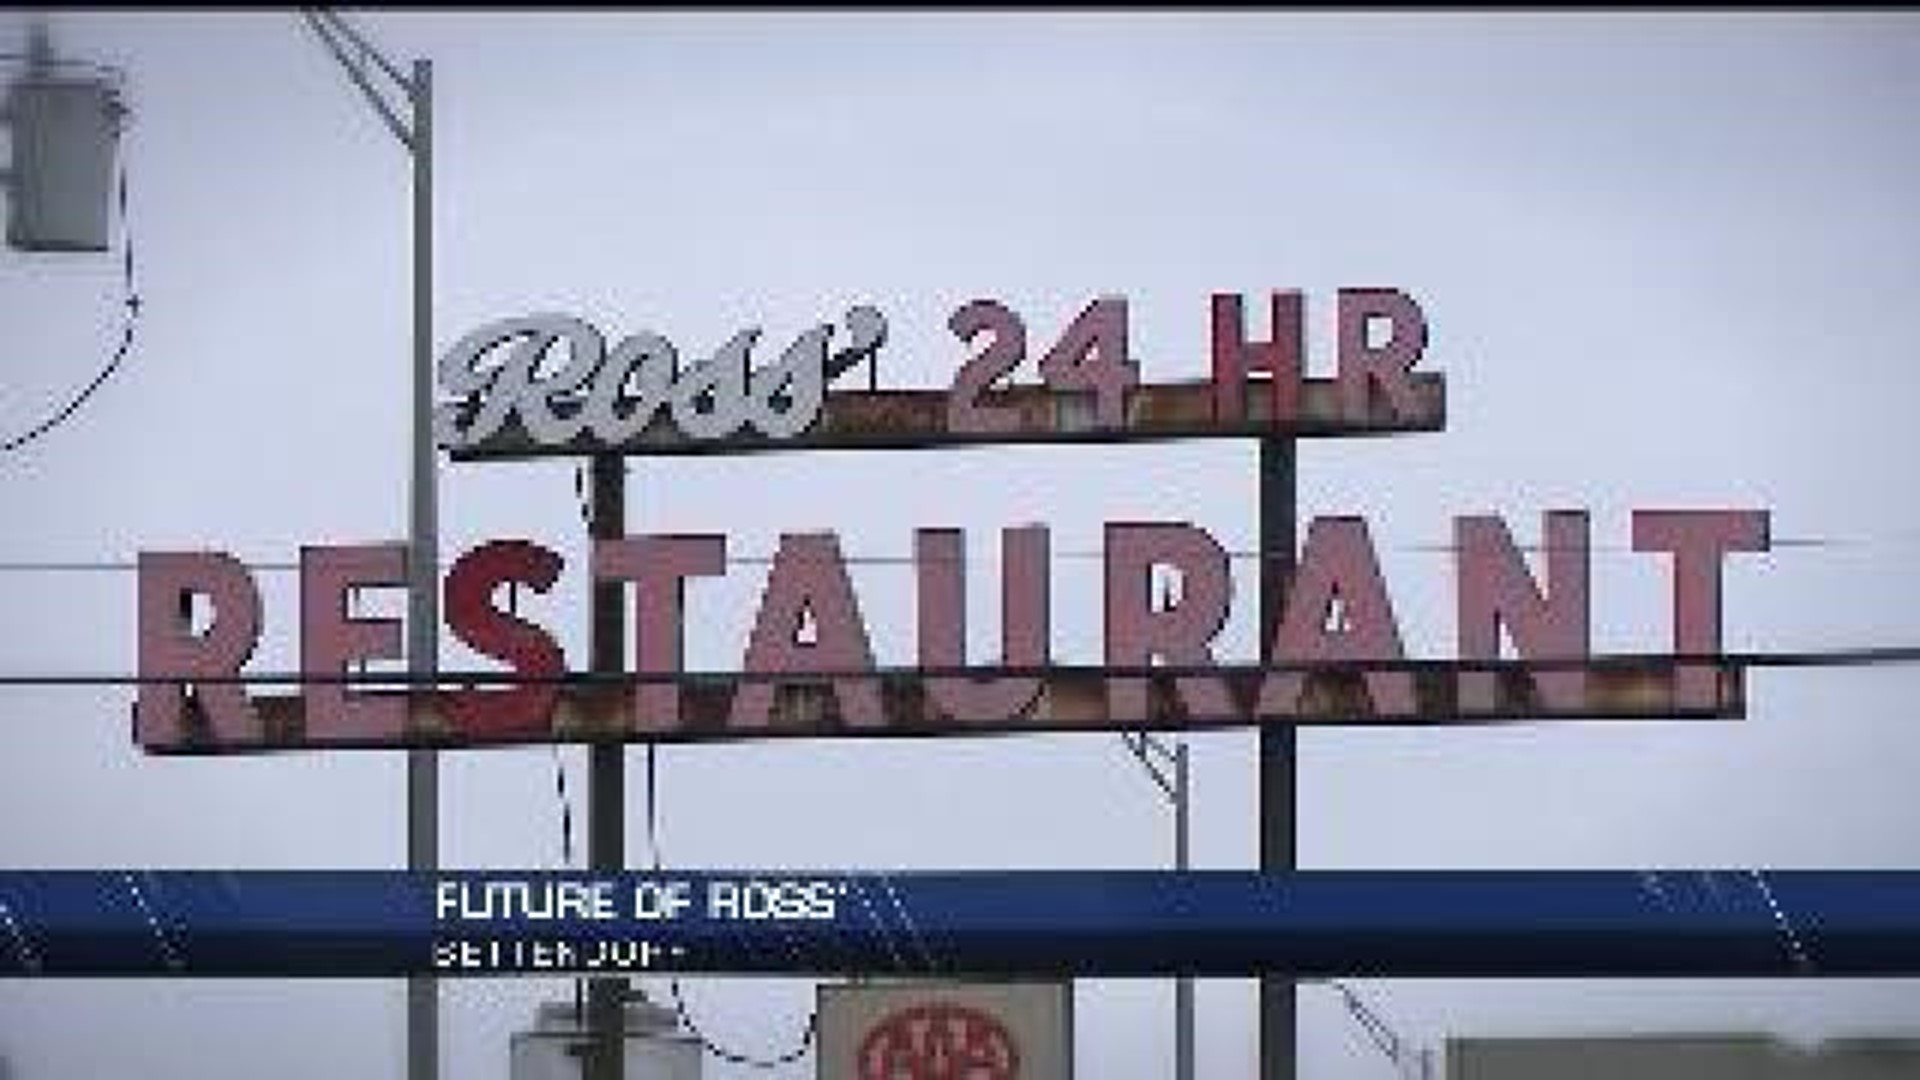 Ross' 24 Hour Restaurant Seeks New Location